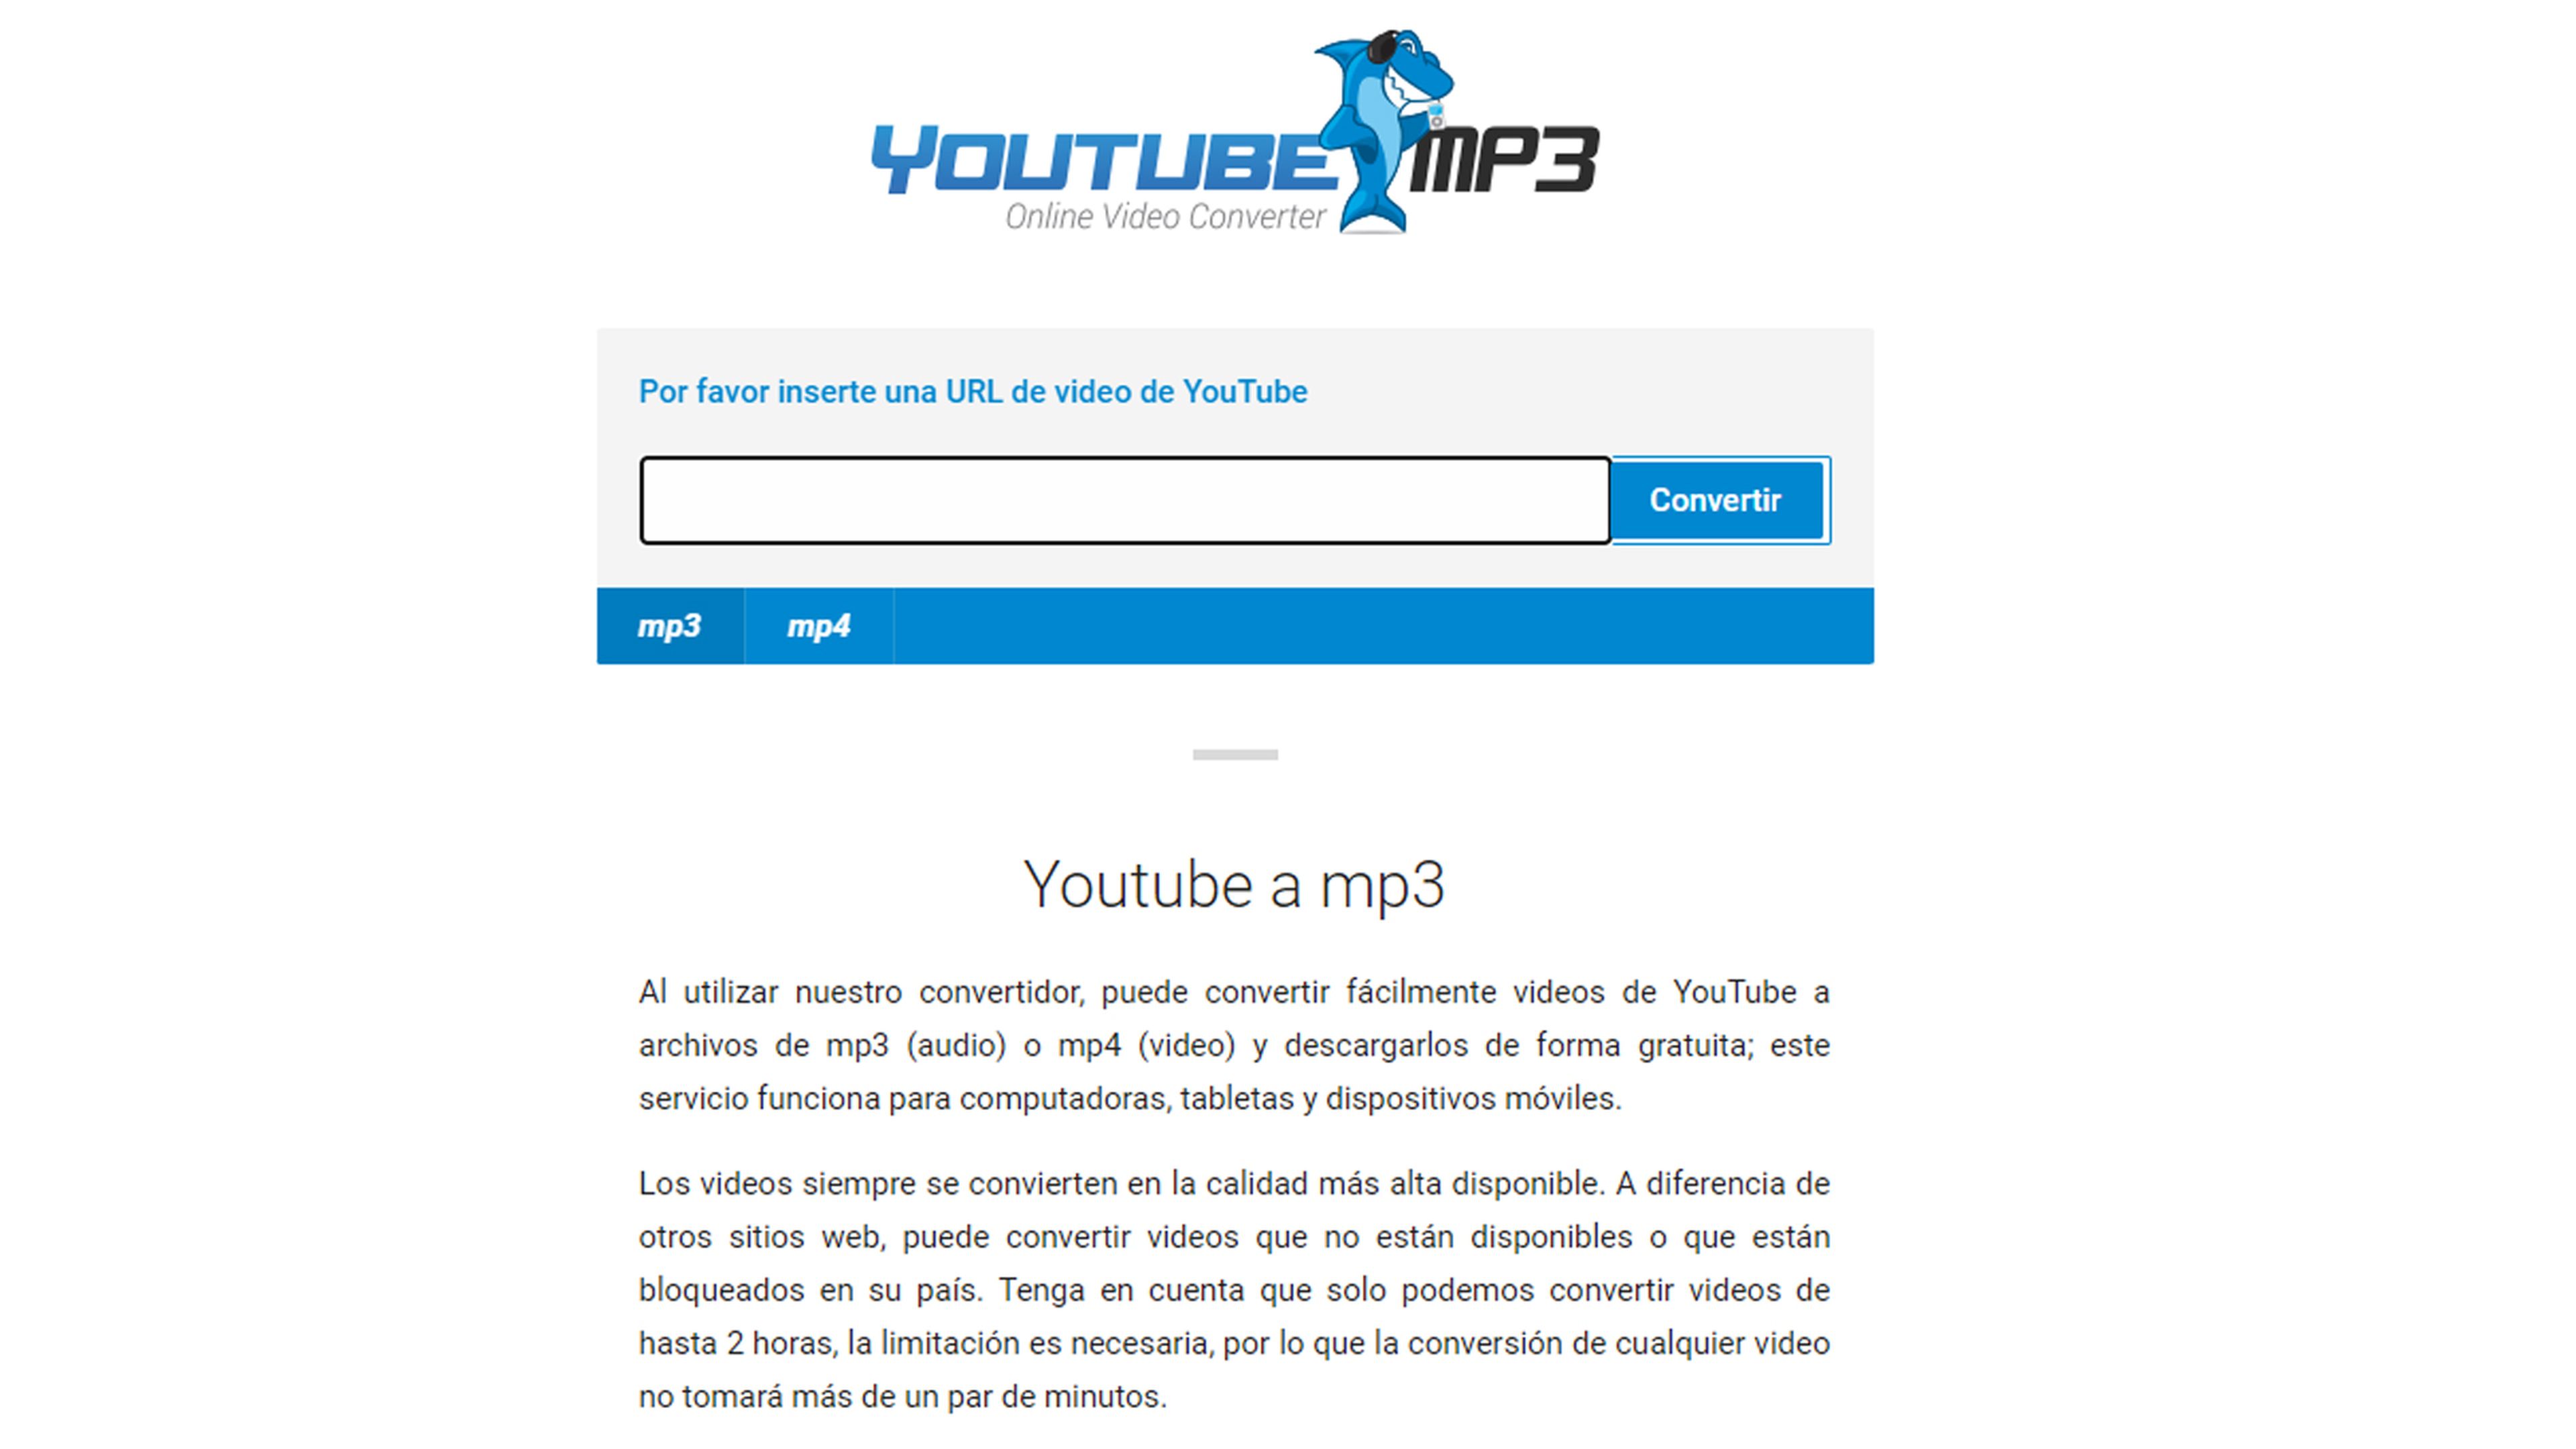 YouTube MP3 Online Video Converter